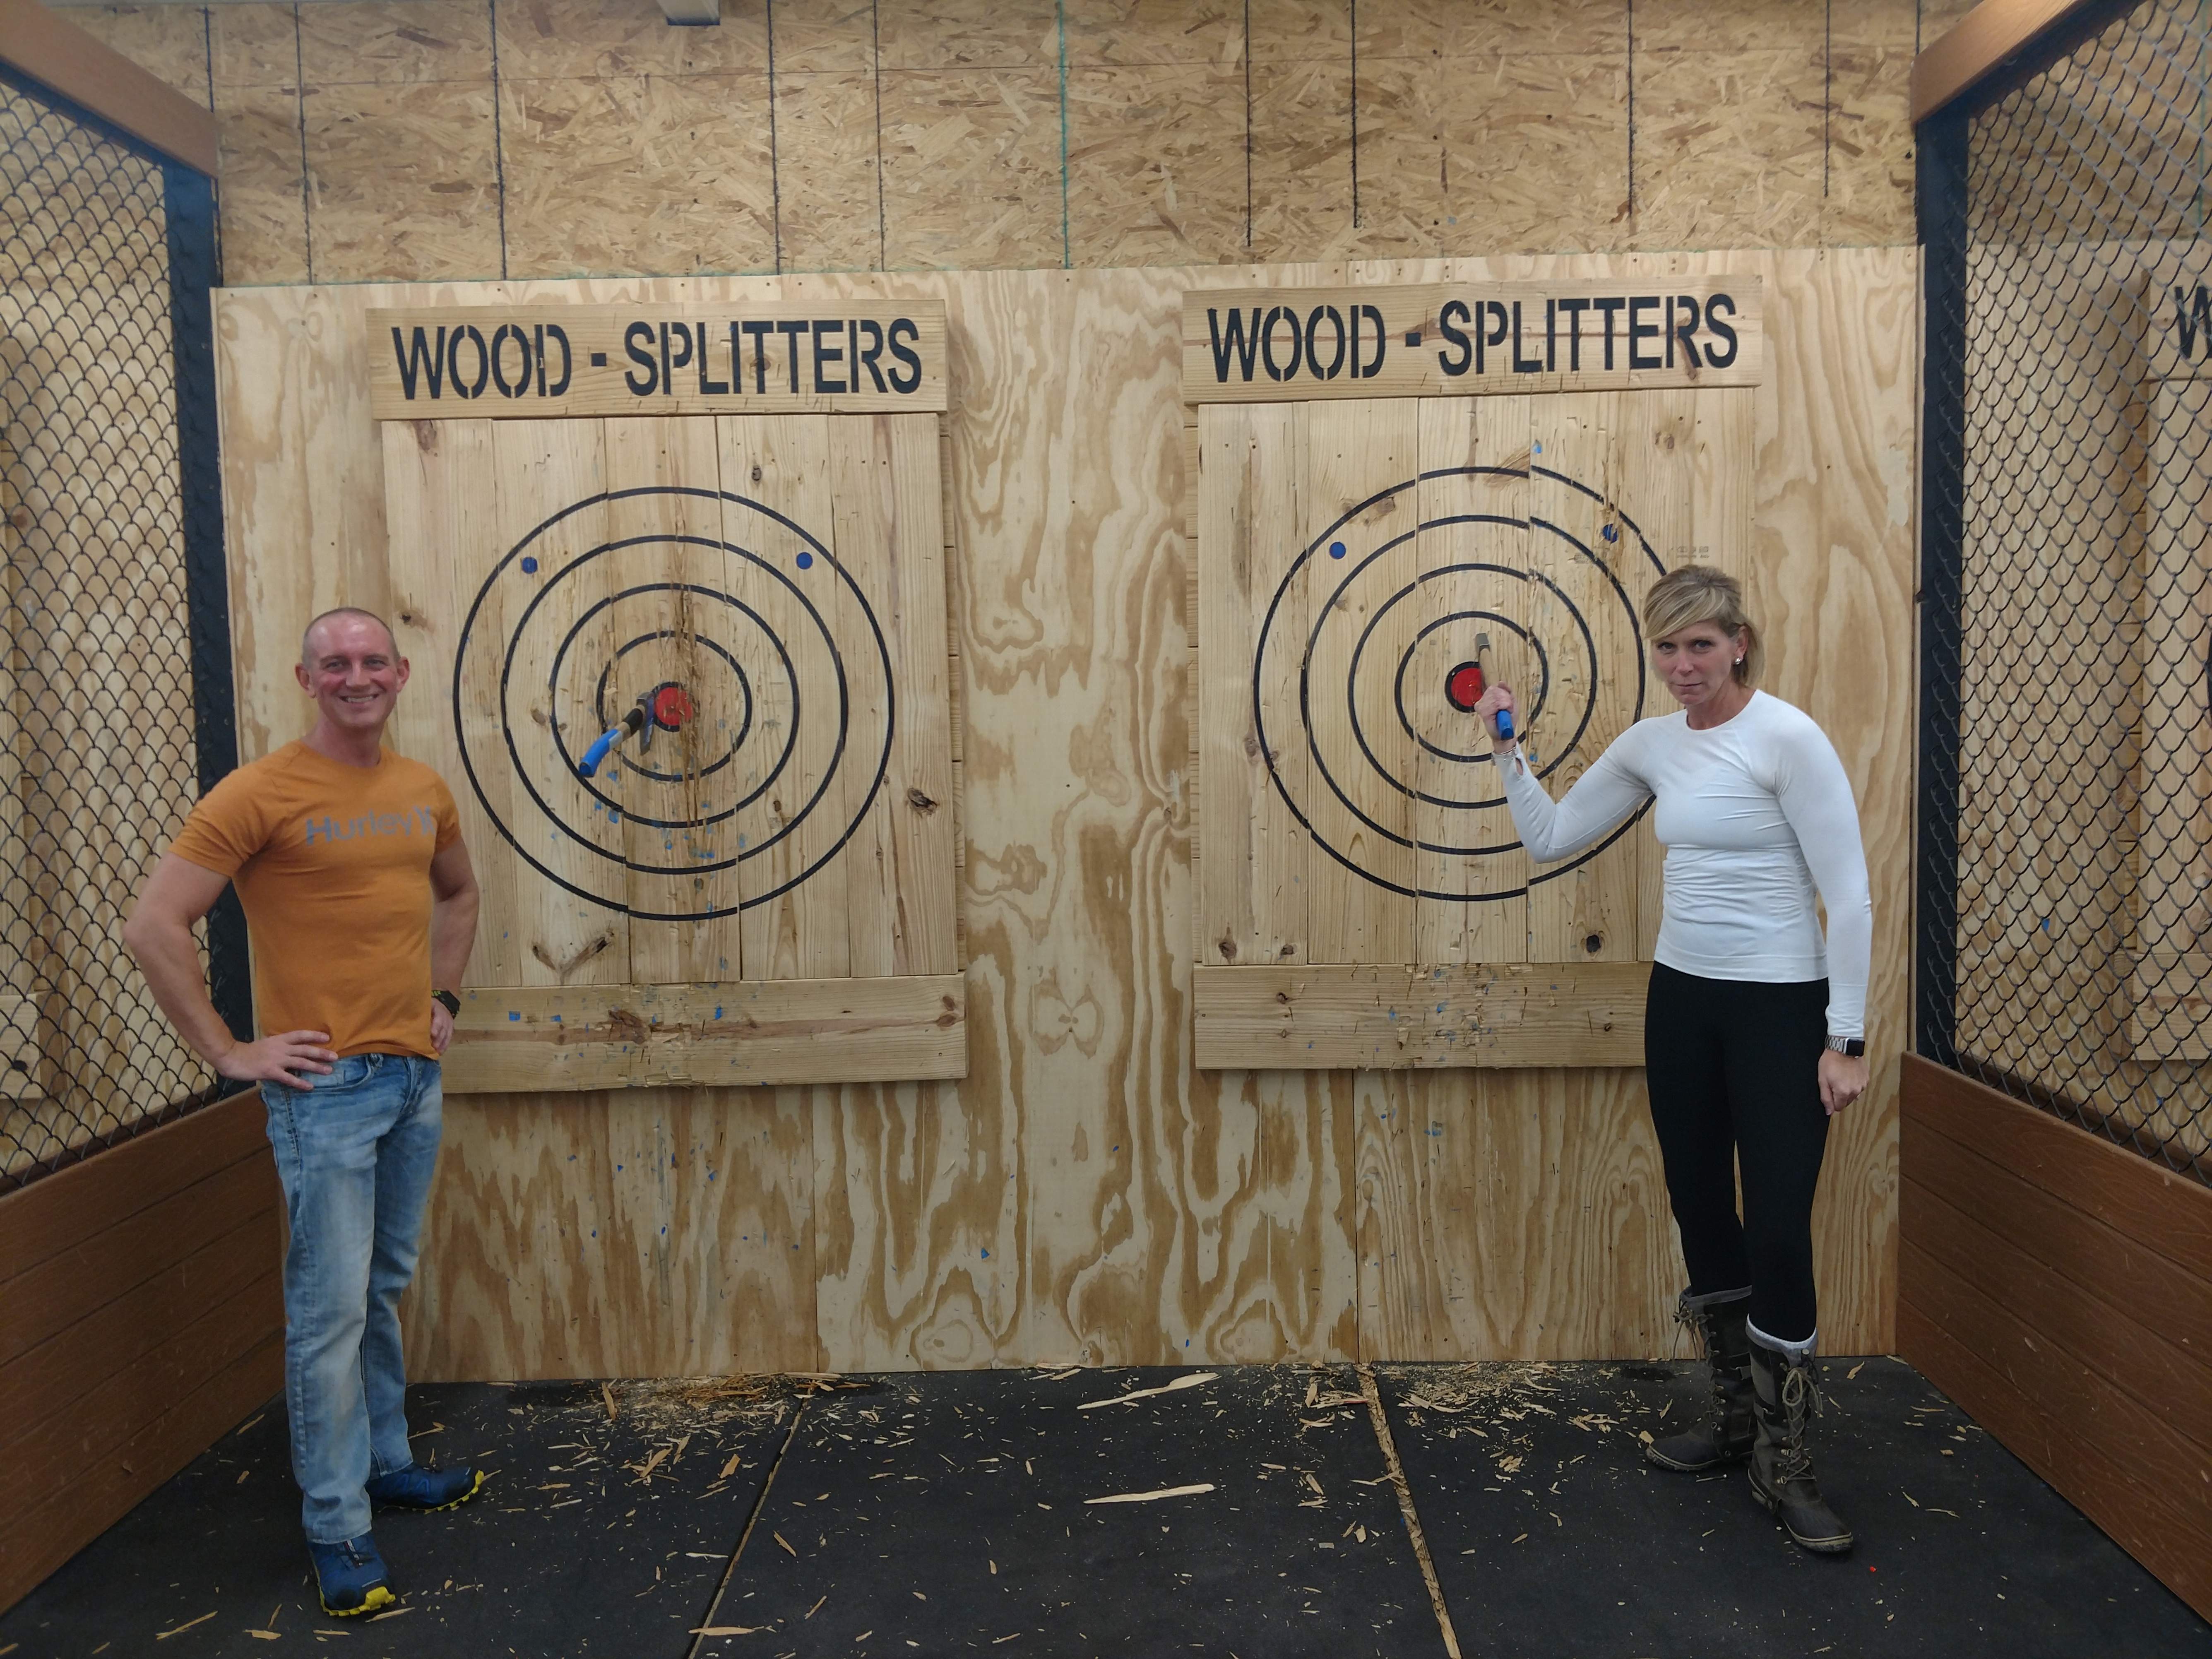 Wood-Splitters Axe Throwing Gallery Image 59